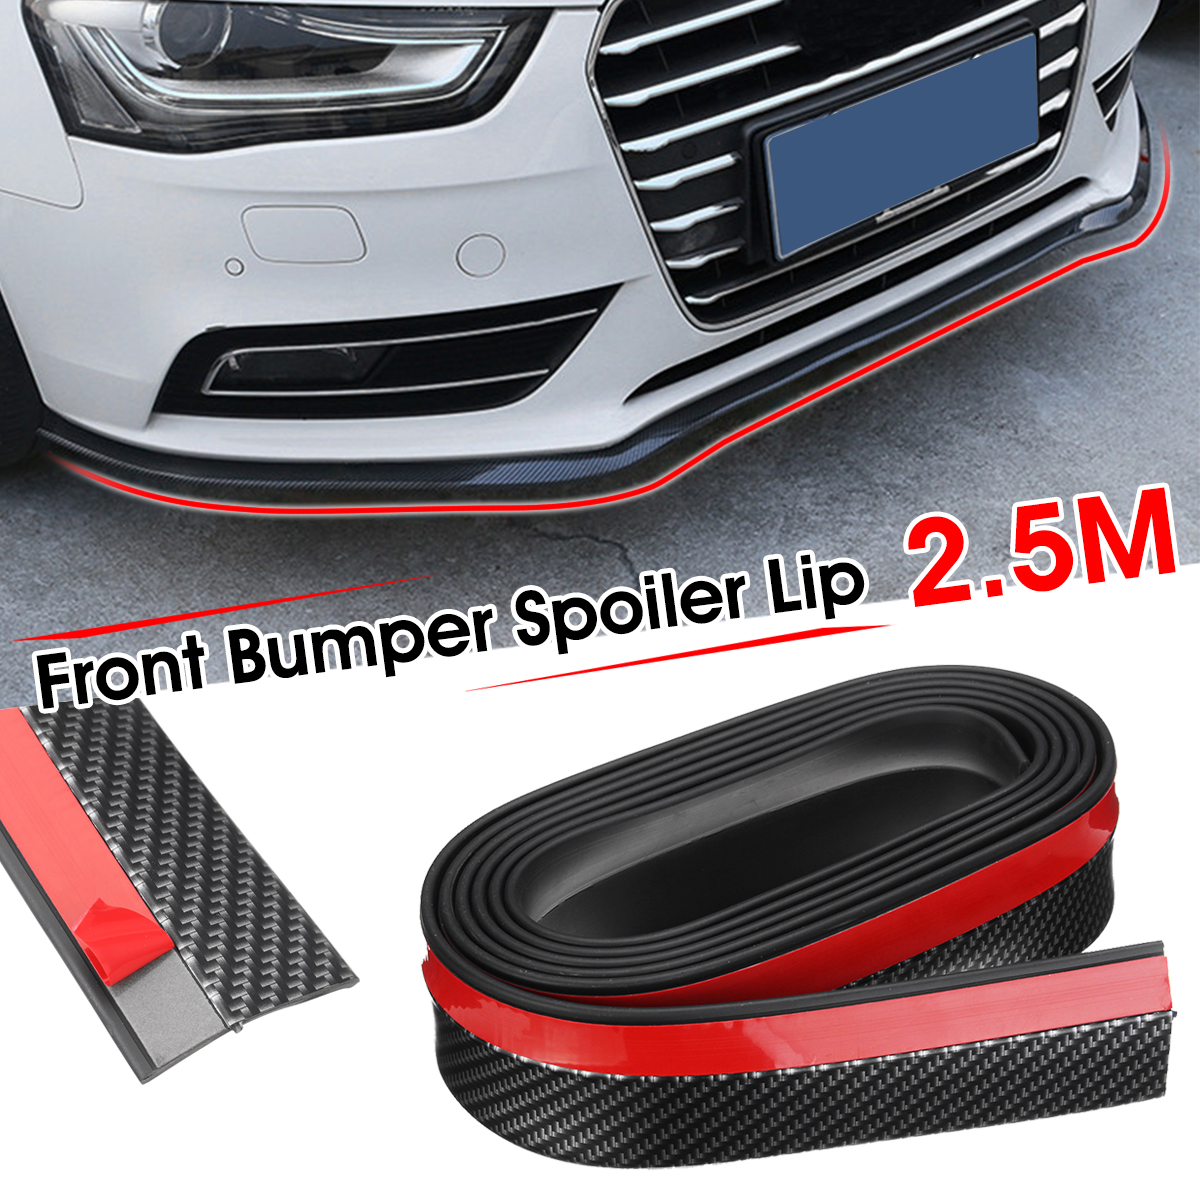 25M-Carbon-Fiber-Color-Car-Front-Bumper-Spoiler-Lip-Splitter-Protector-Auto-Trim-Sticker-Universal-1386107